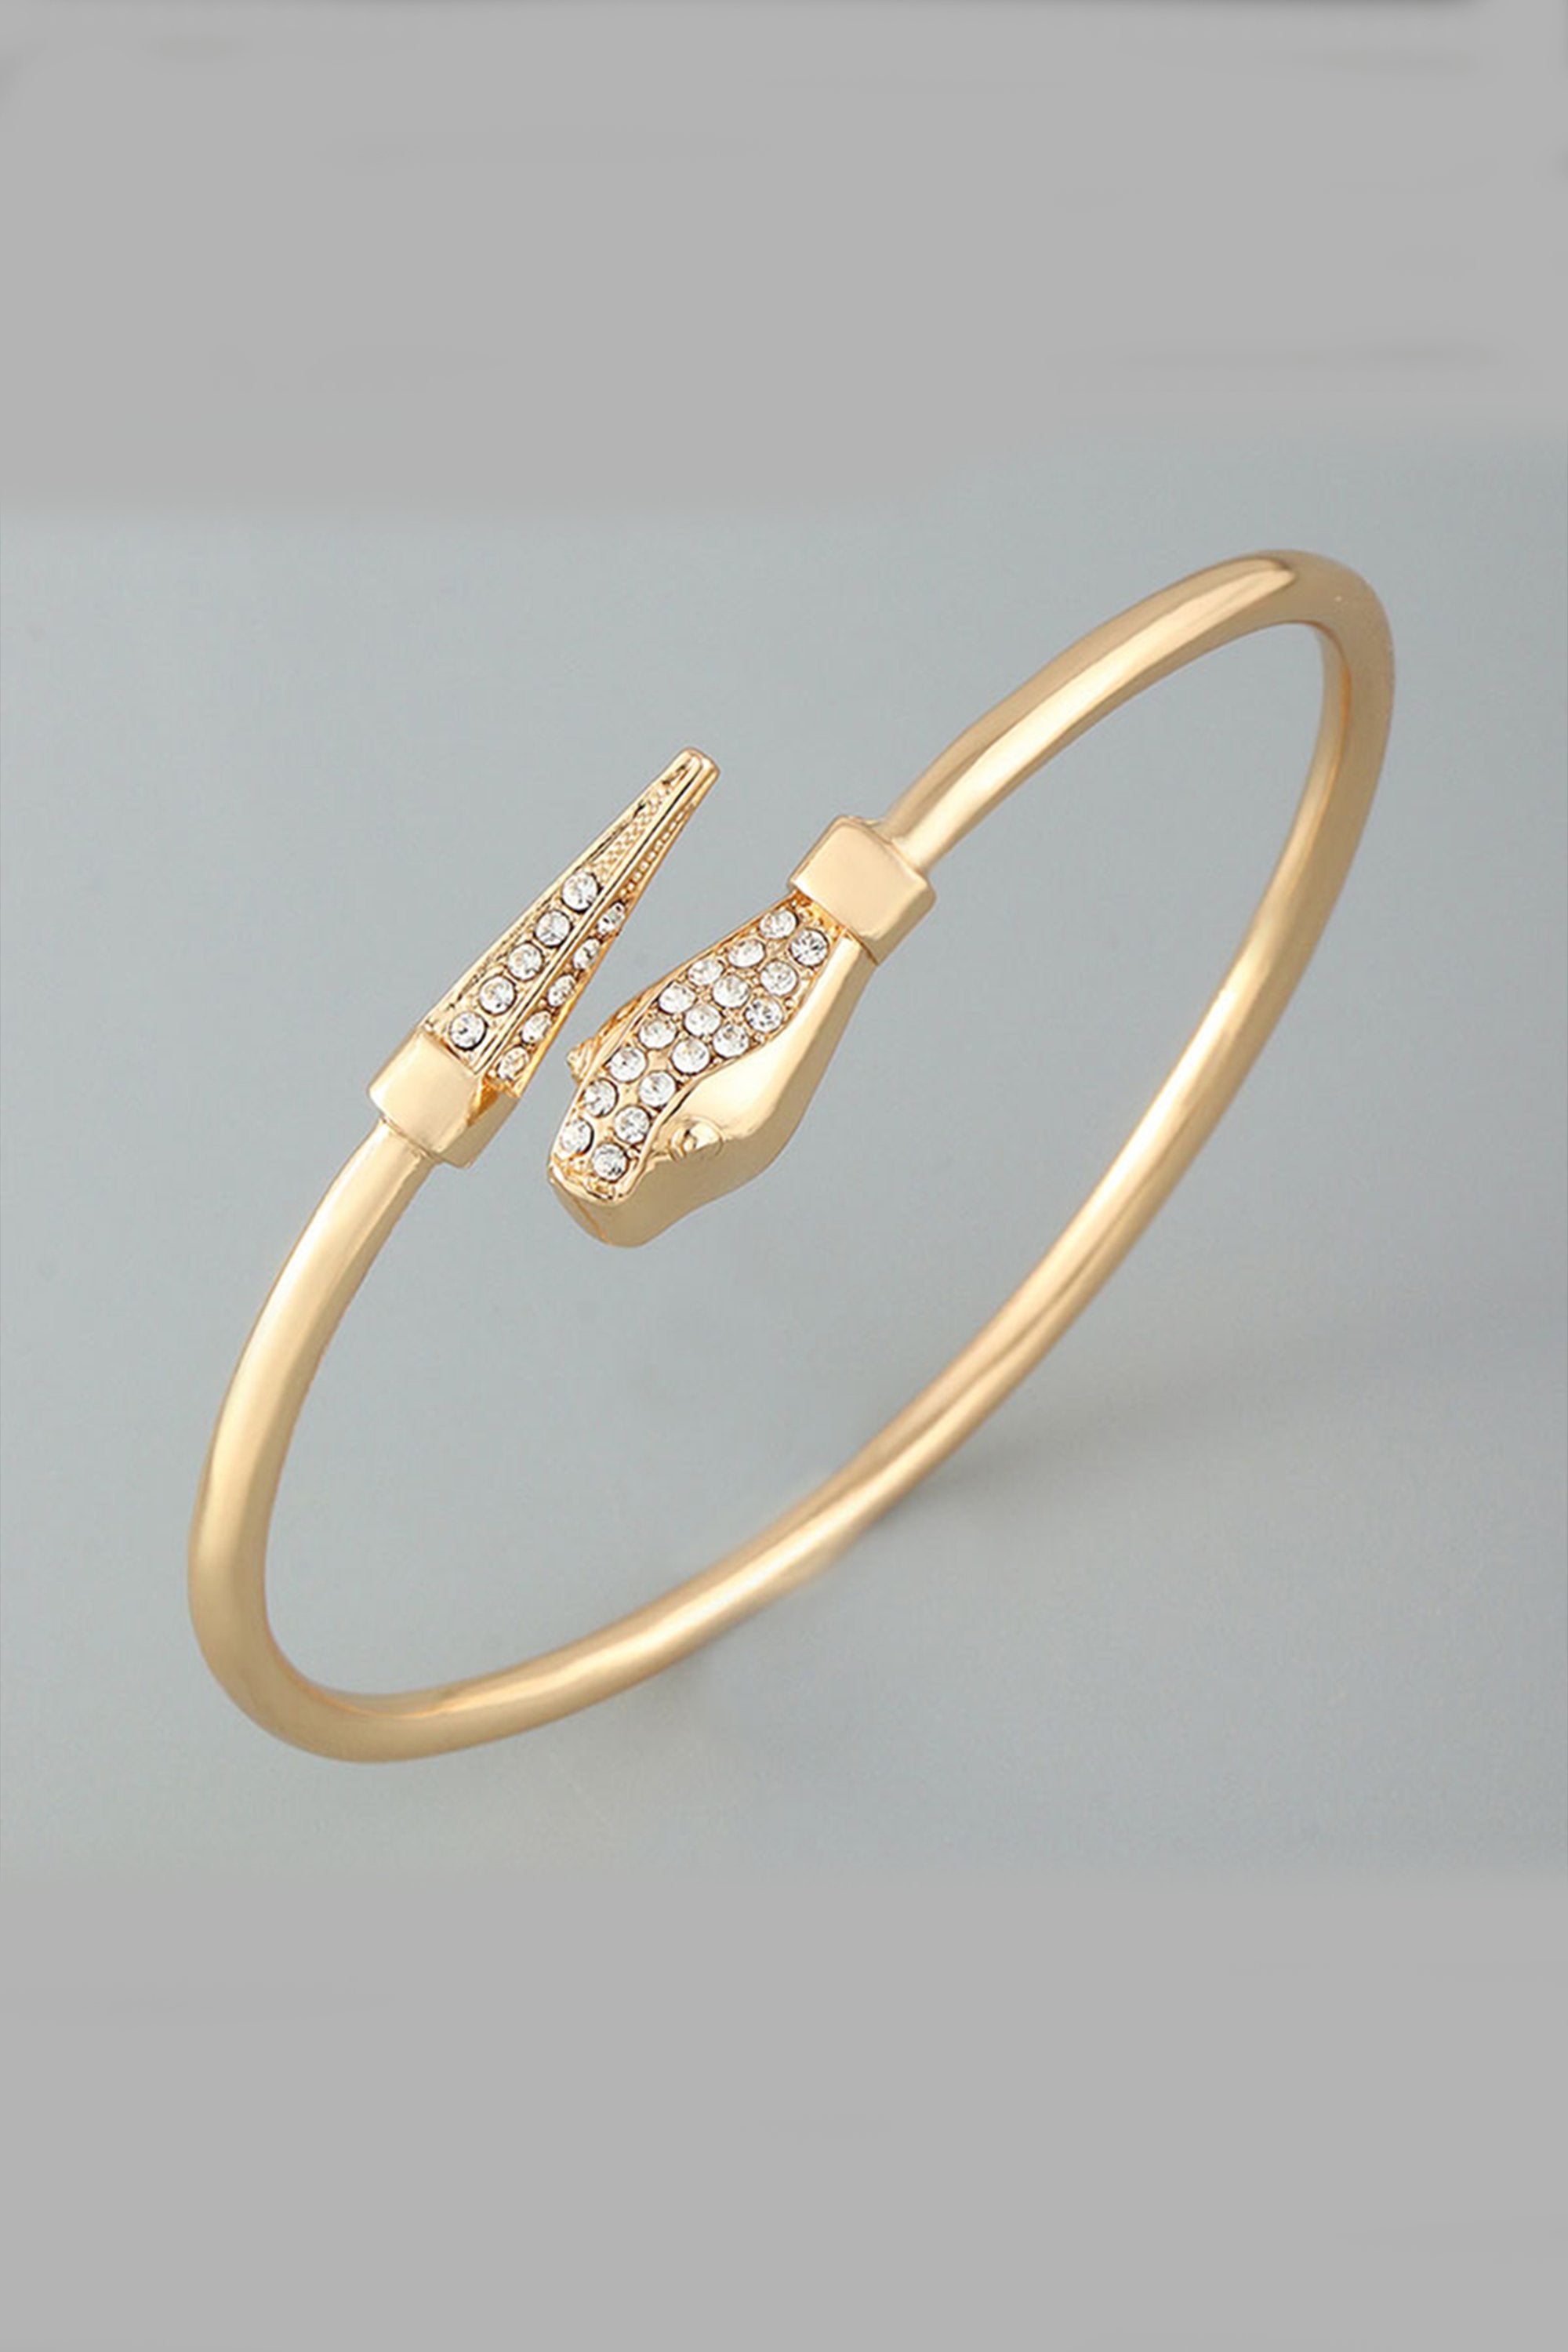 Latest Bracelet Designs  Now Buy Latest Bracelet Online - Niscka